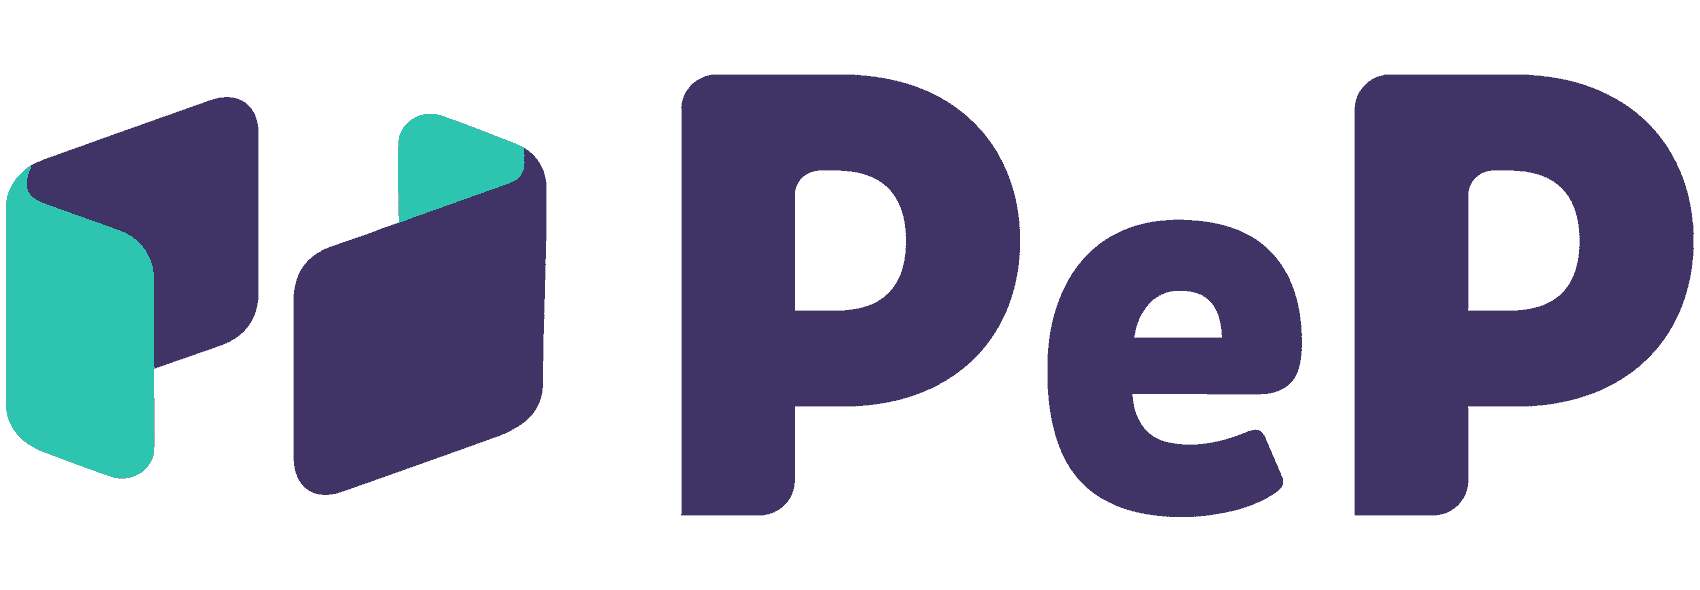 Pep 1 лого. Pep проекты. Lel Pep логотип. Bolelin логотип. Английский пеп